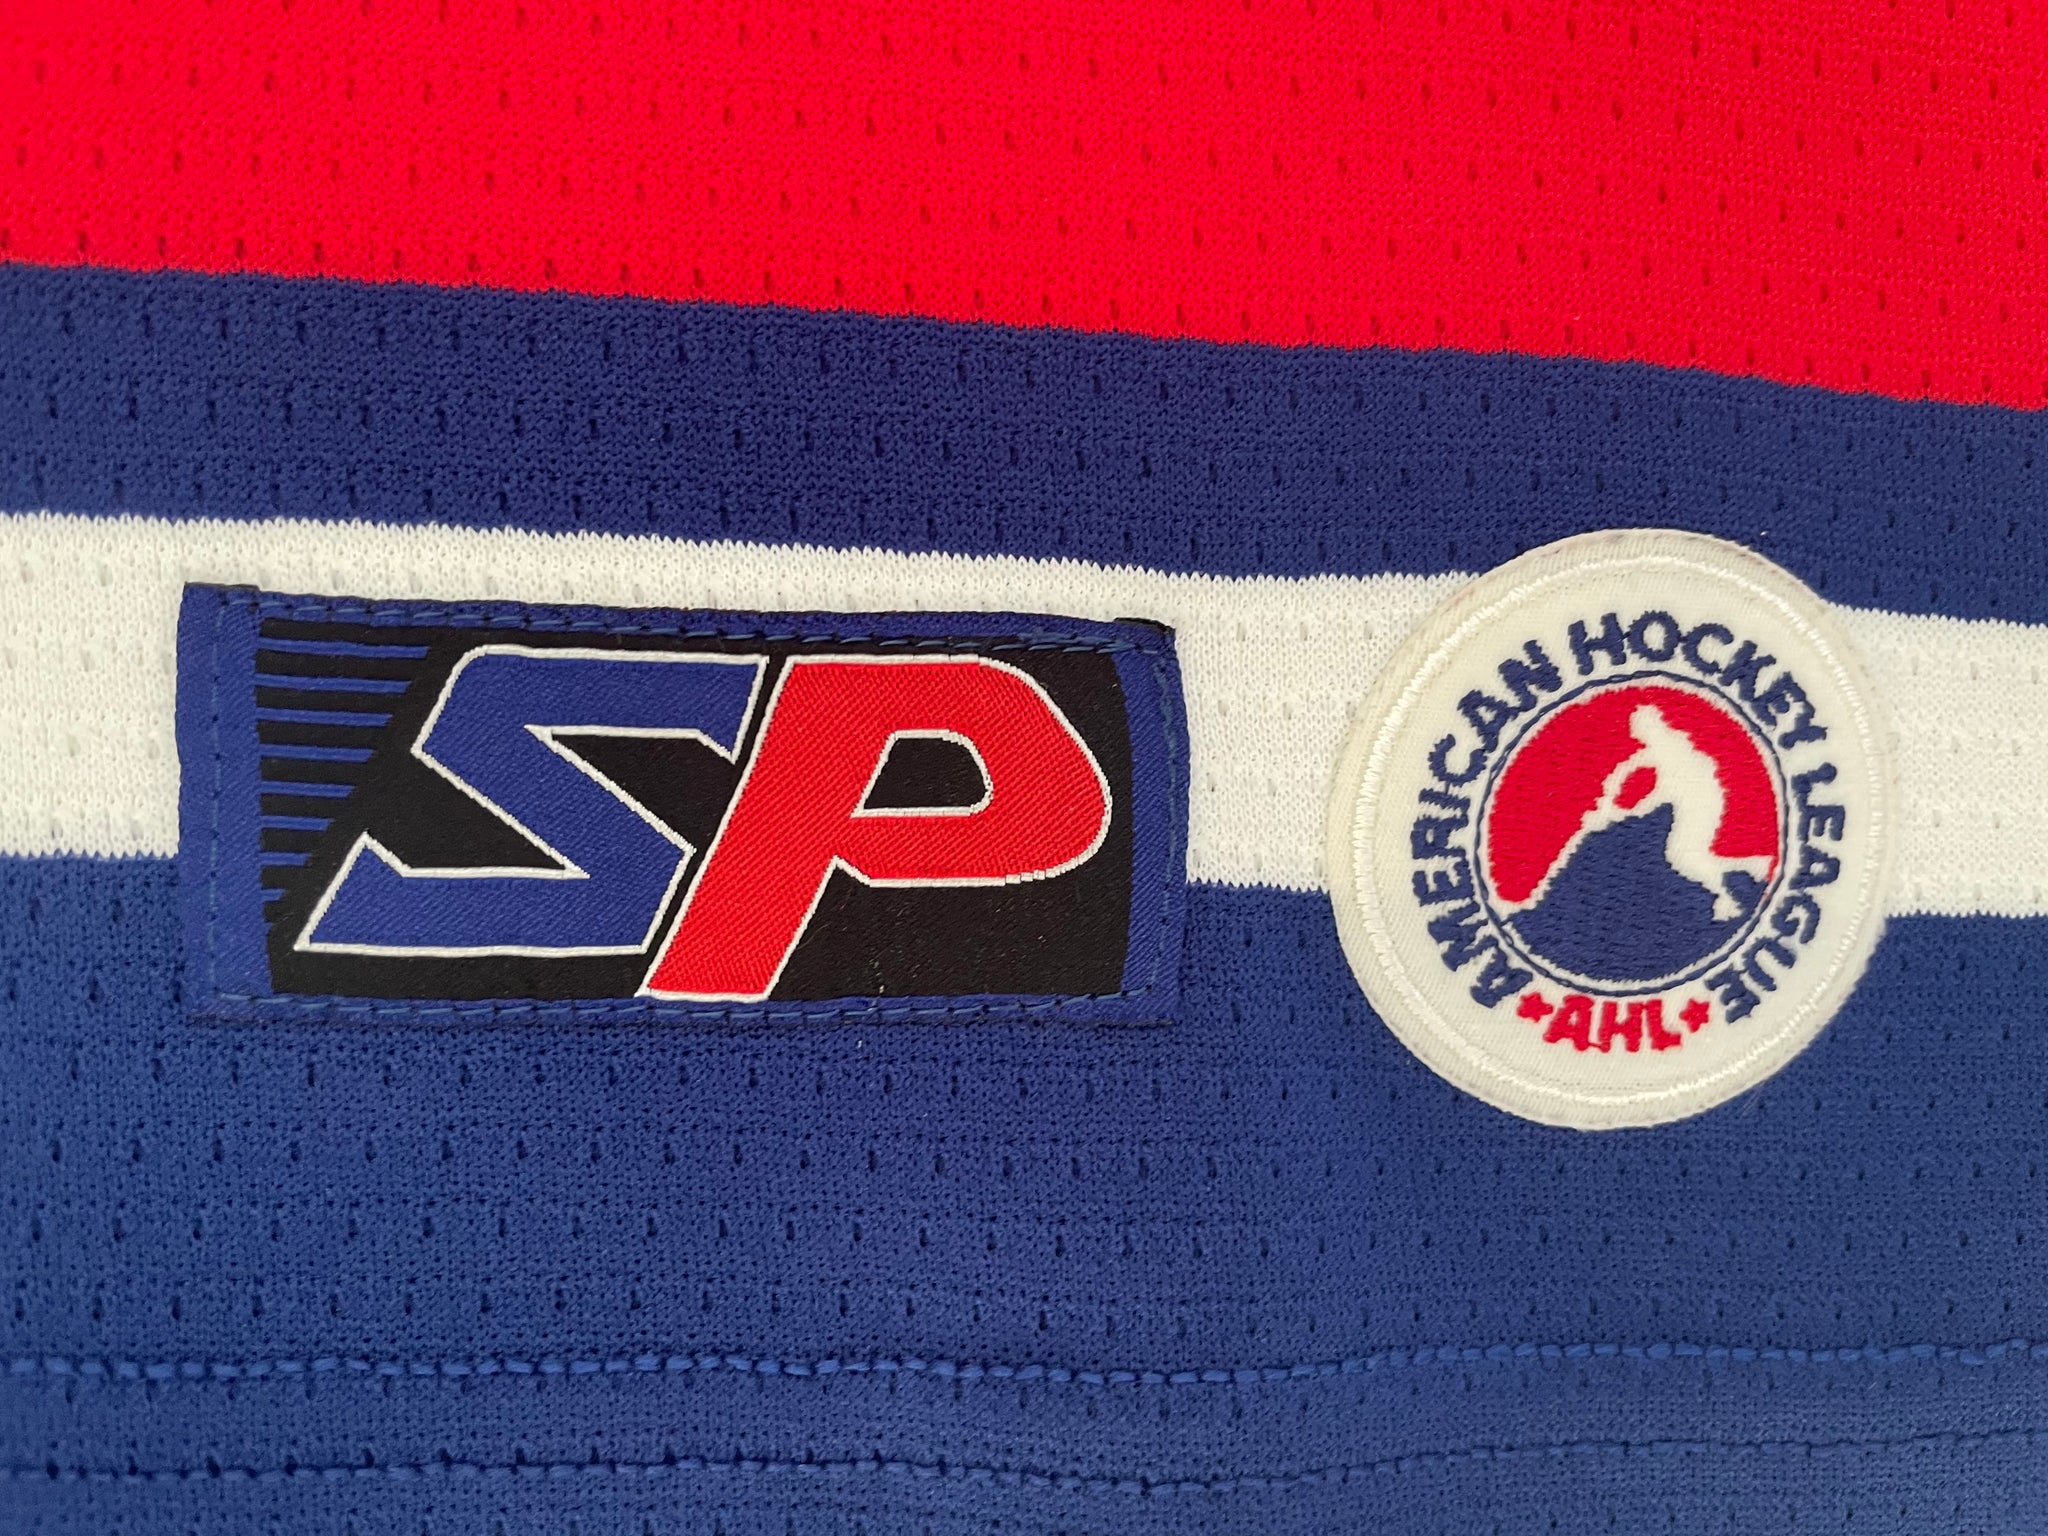 Rochester Americans hockey team dawn Buffalo Bills inspired jerseys